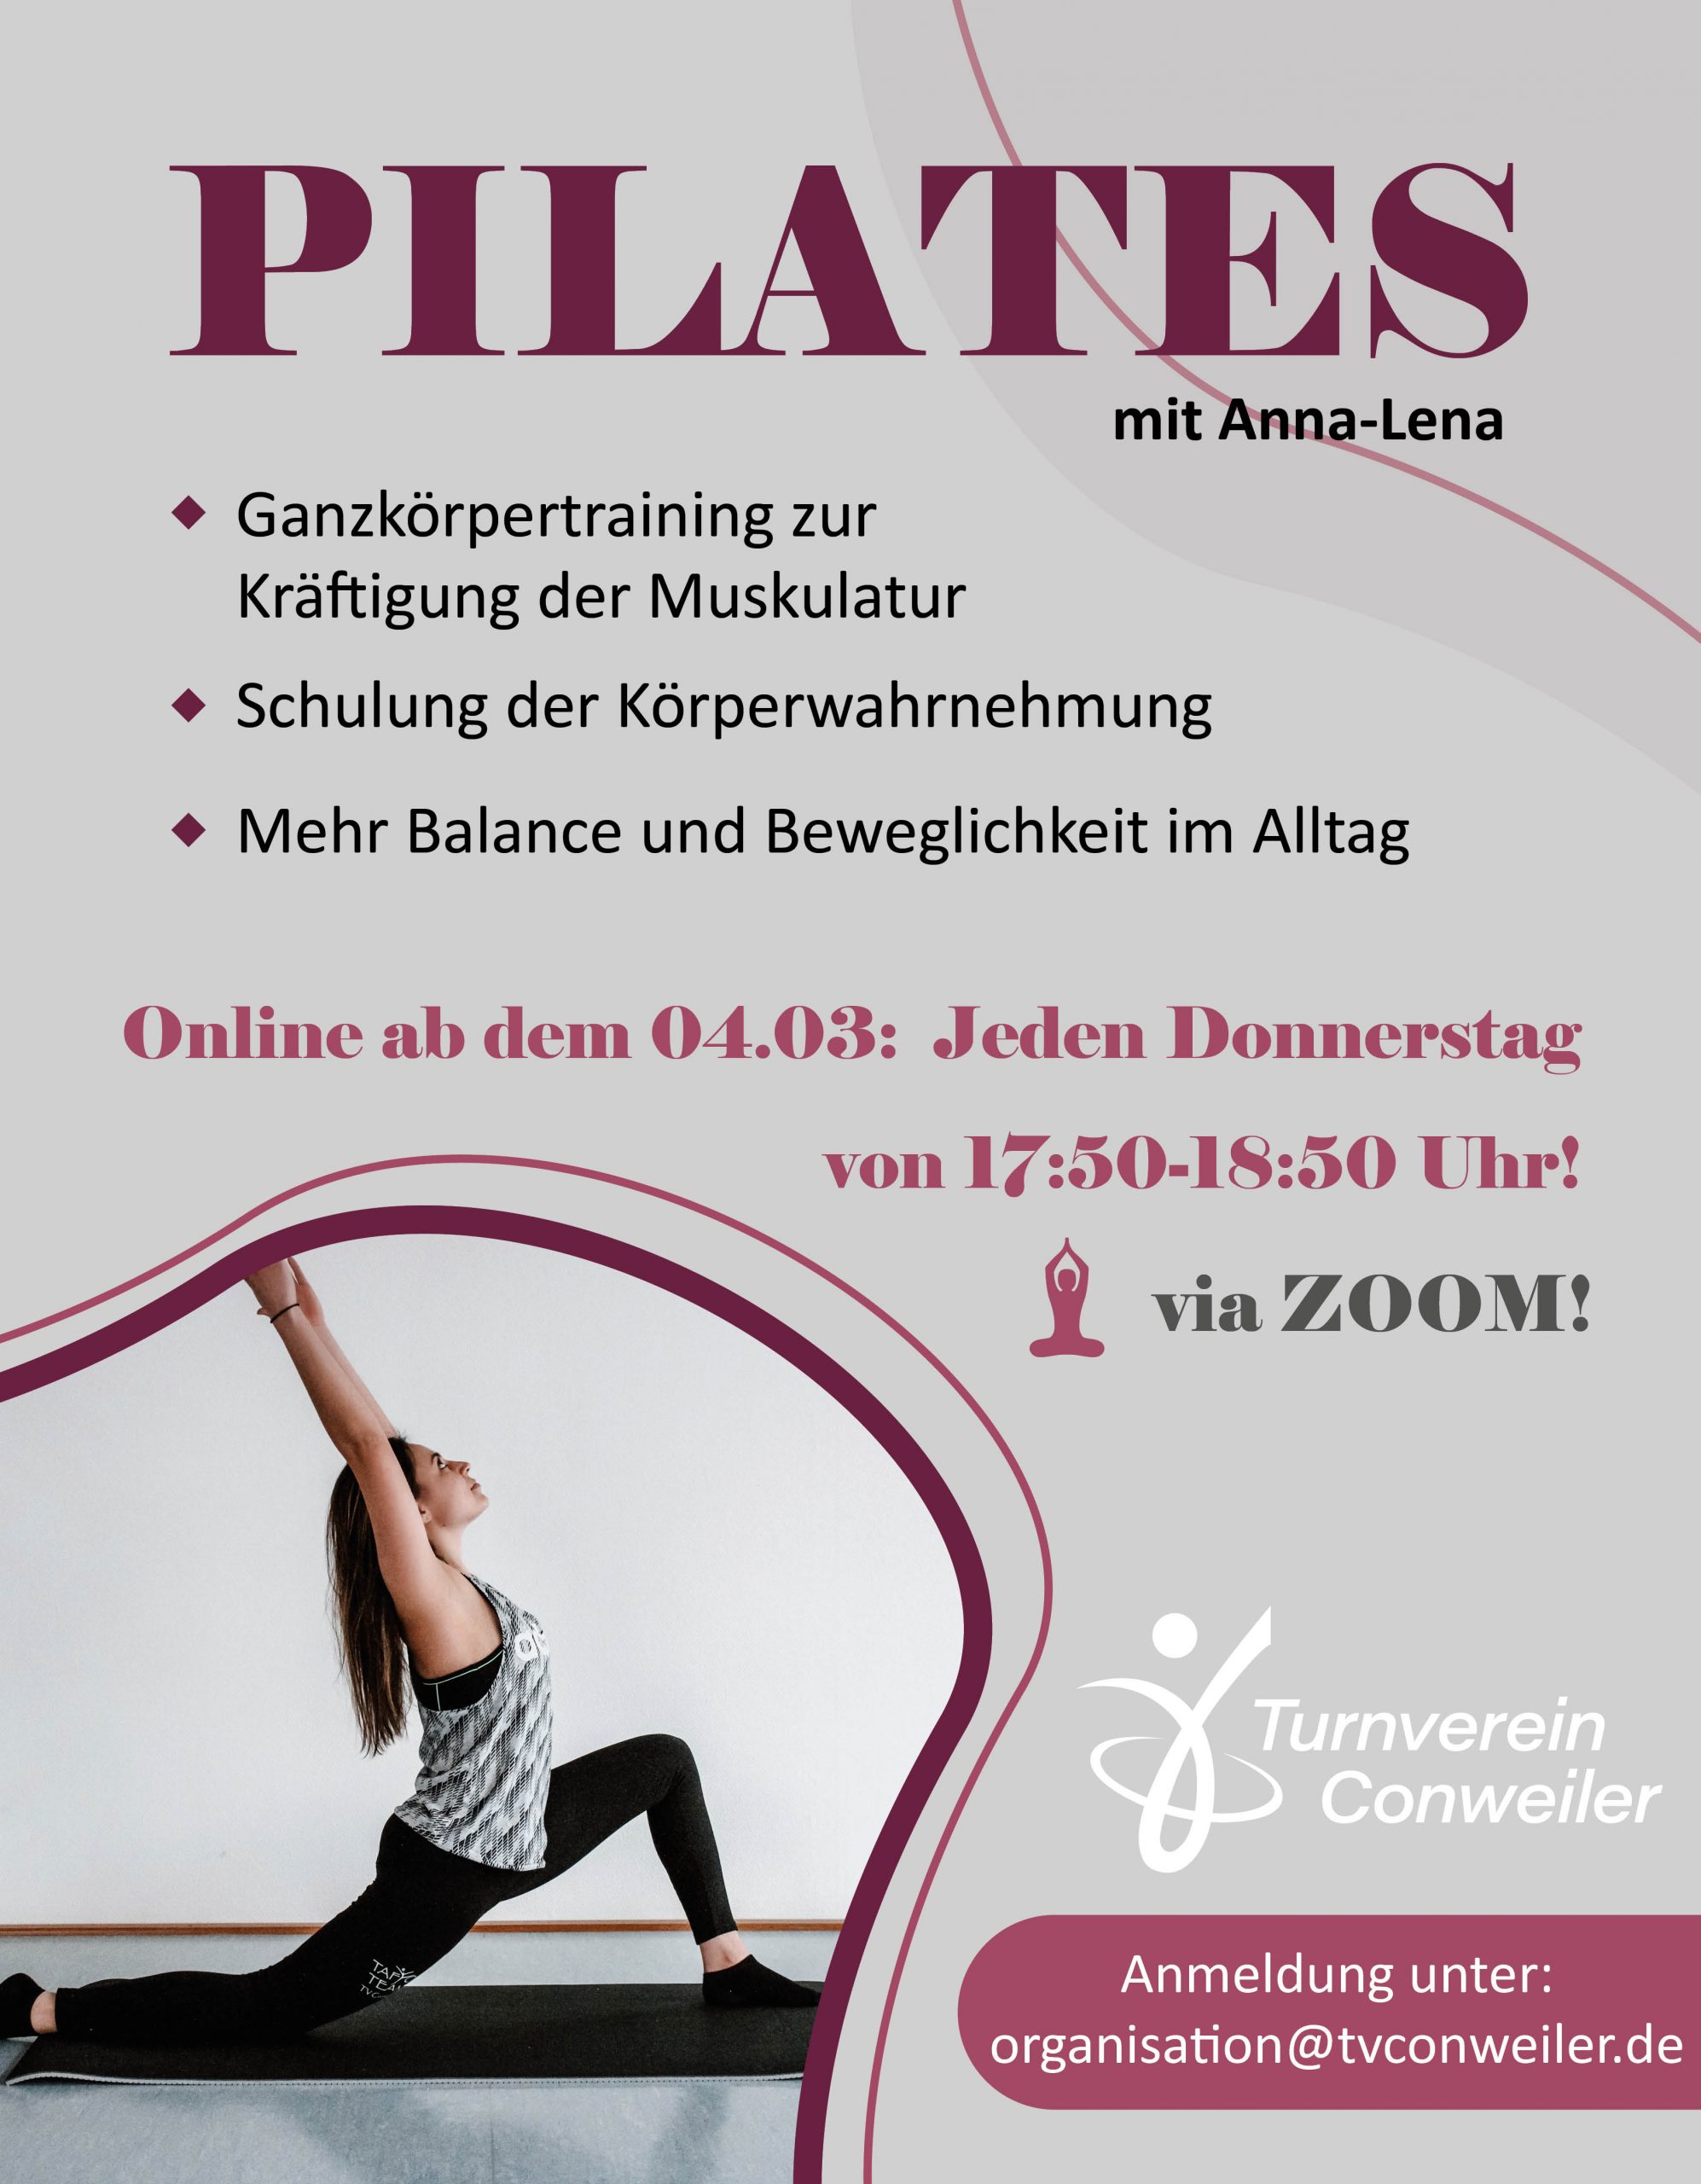 https://tvconweiler.de/wp-content/uploads/2021/02/Pilates-Flyer-Final-scaled.jpg